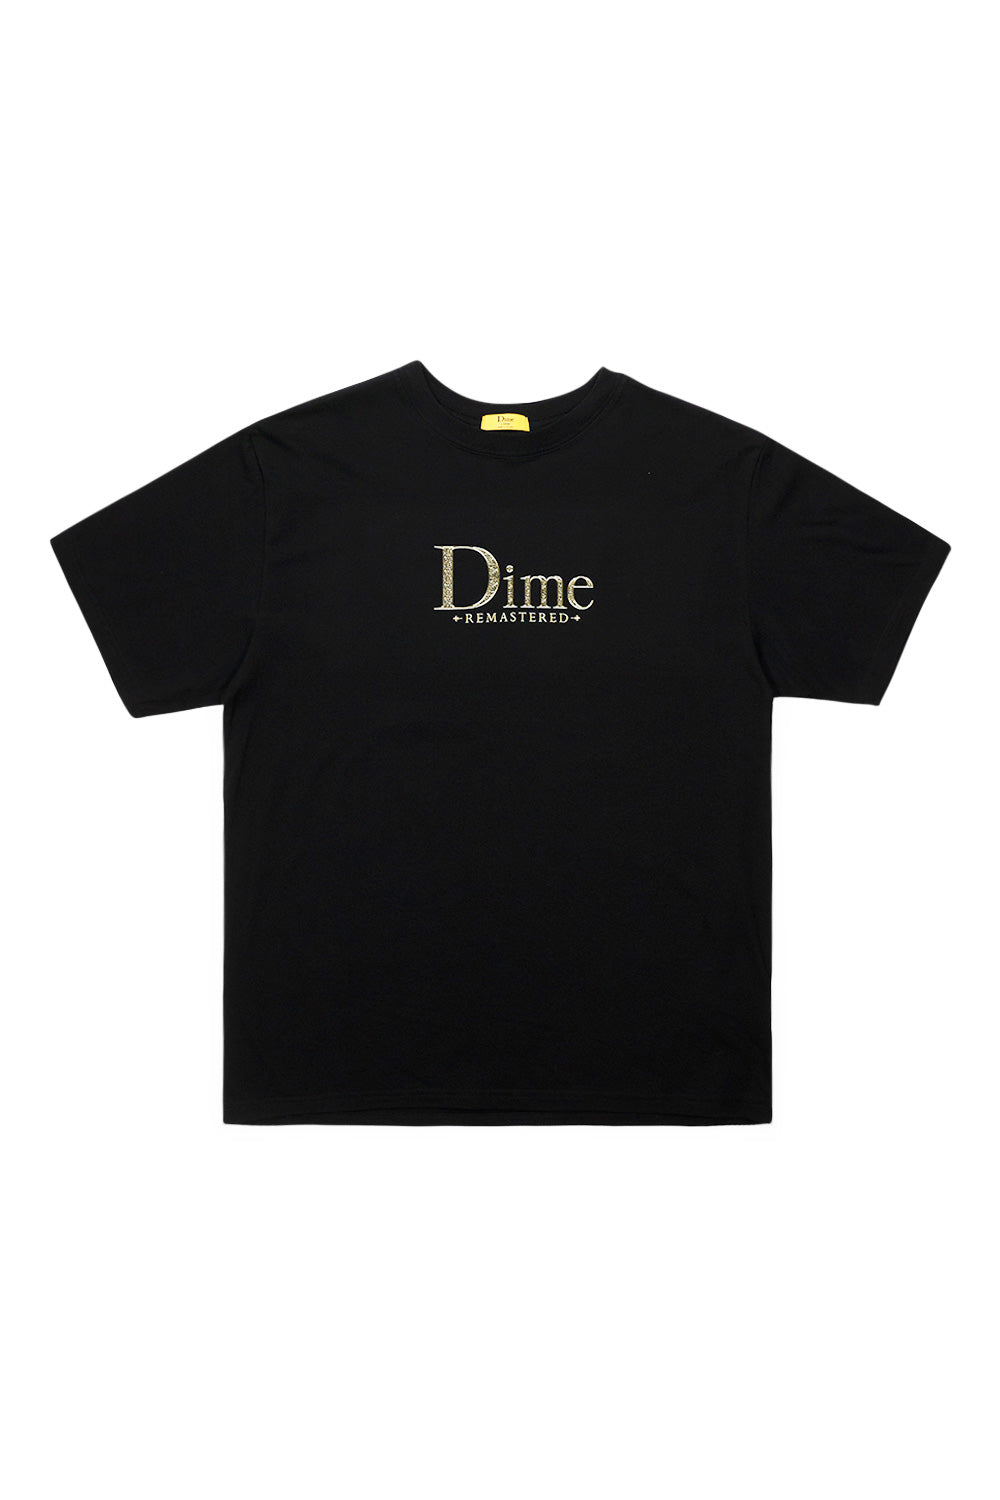 Dime Classic Remastered T-Shirt Black - BONKERS